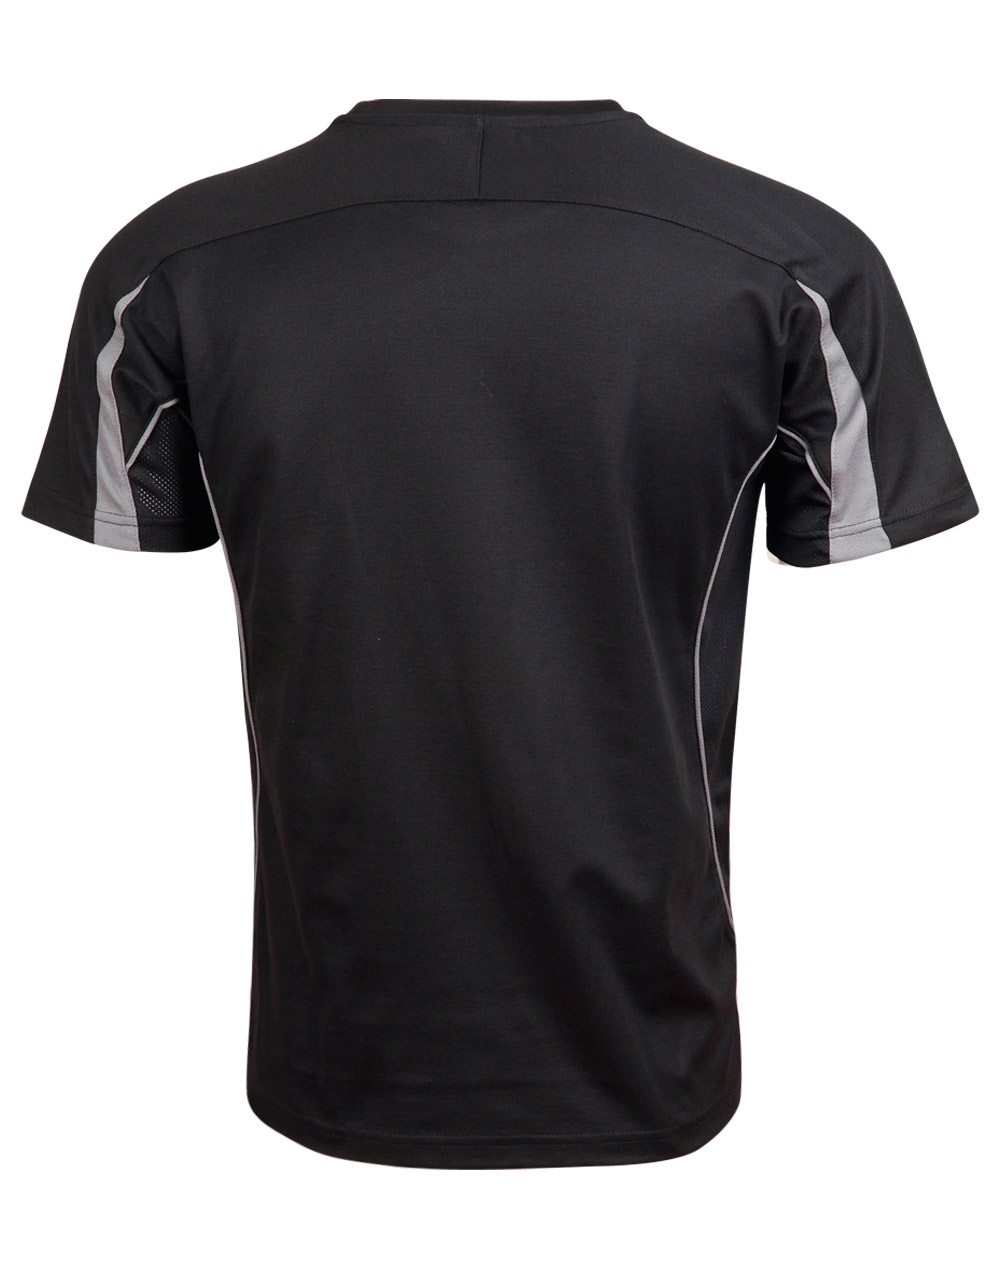 TS53-Legend T-Shirt-Cotton Backed-Breathable Mesh Panels-Contrast ...